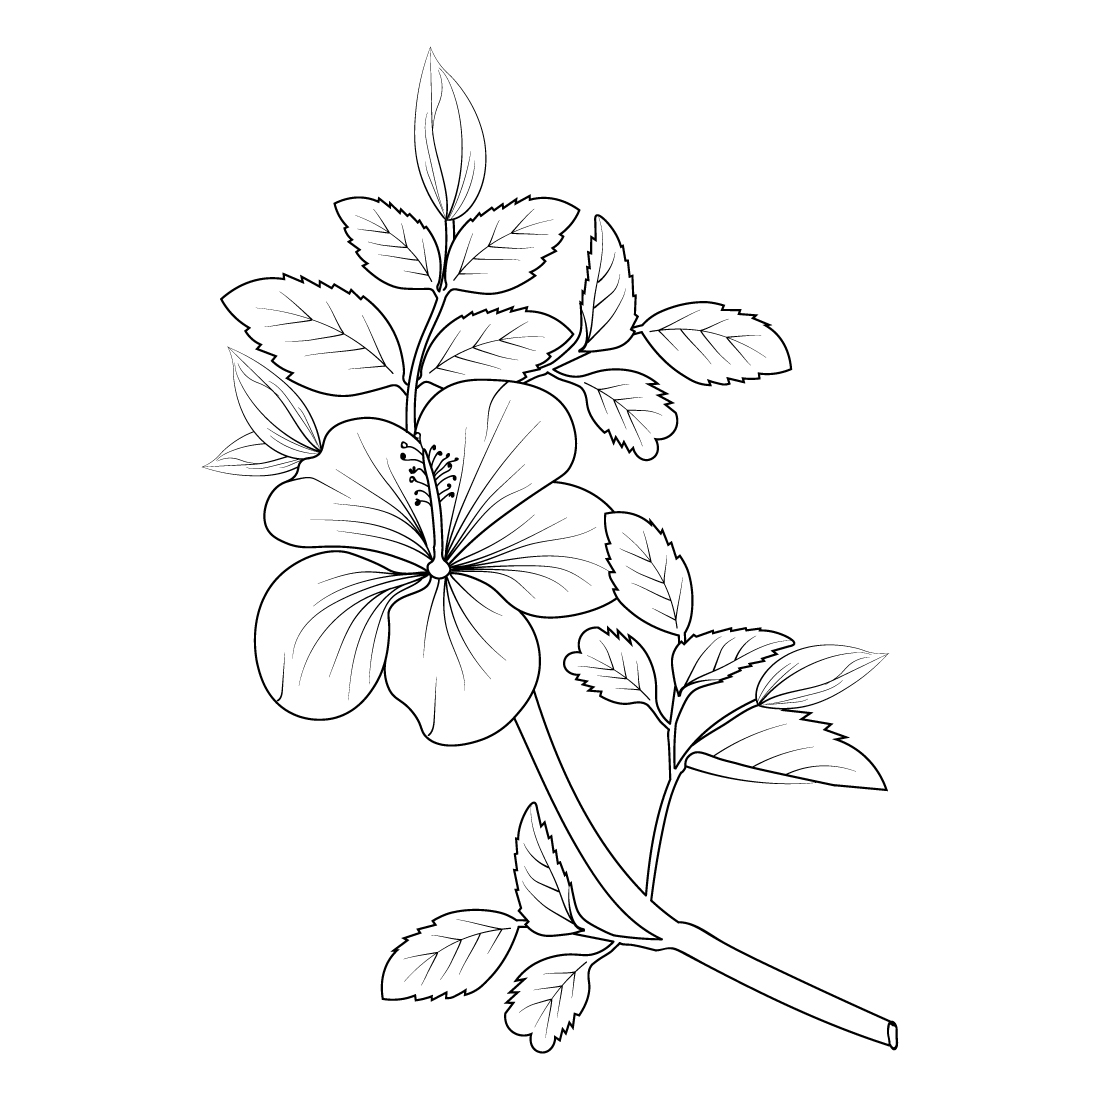 Botanical hibiscus flower drawing, hibiscus flower vector art, hibiscus flower pencil drawing preview image.